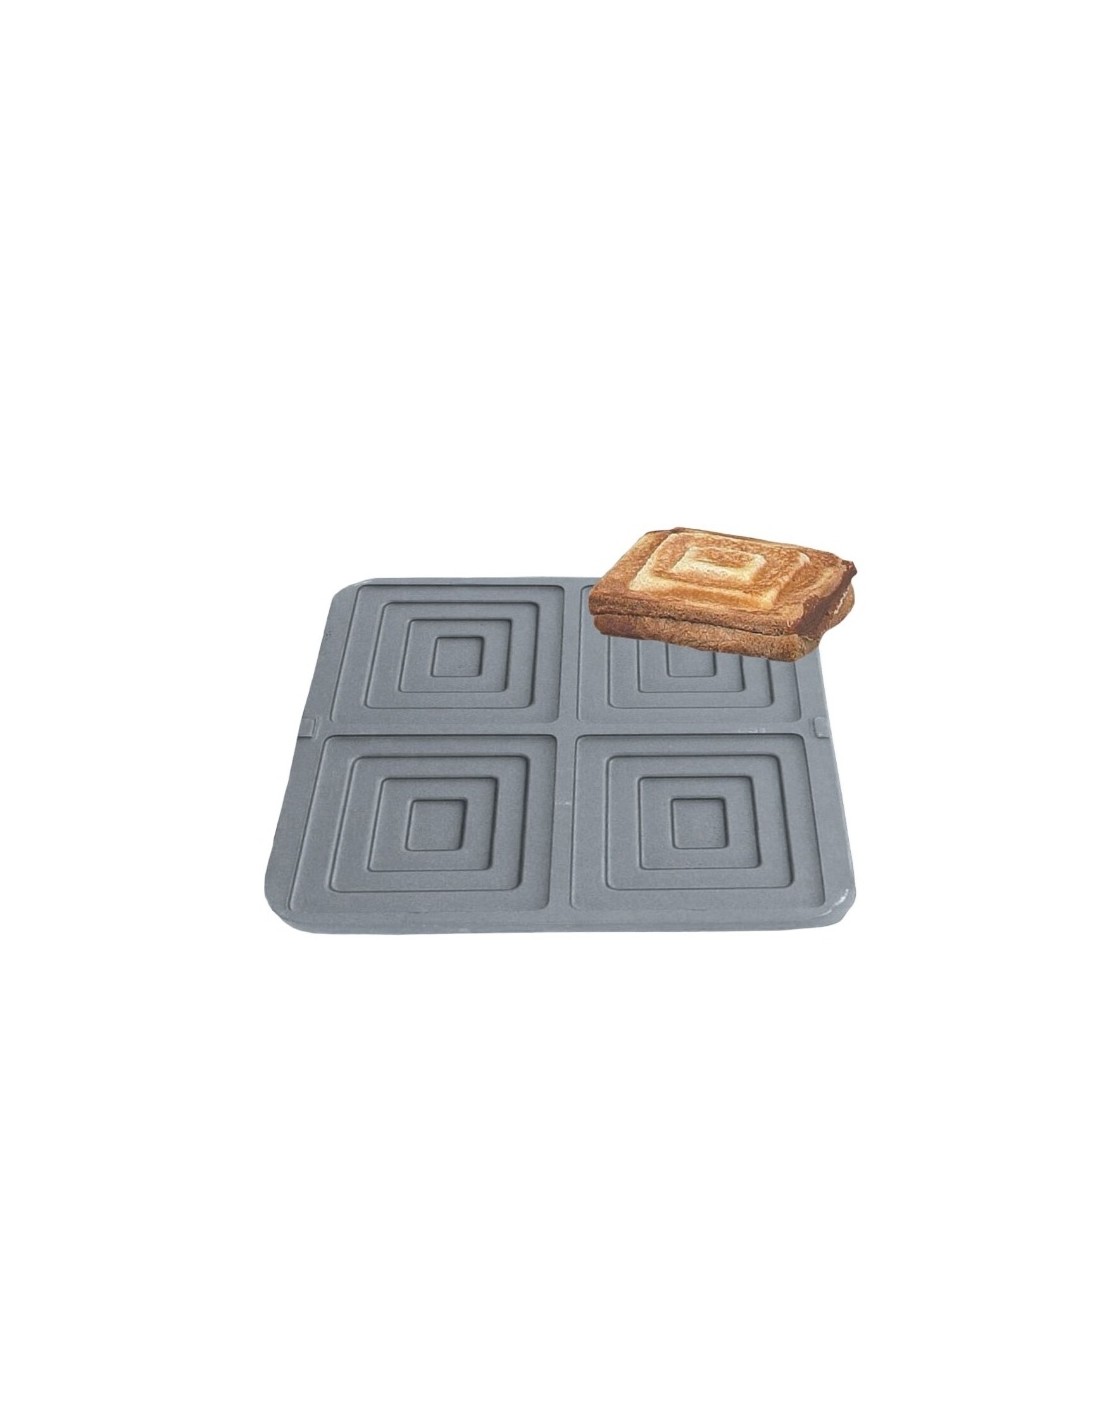 Interchangeable waffel plate - shape: 4 115x125x25 mm waffles - in non-stick teflonate aluminium